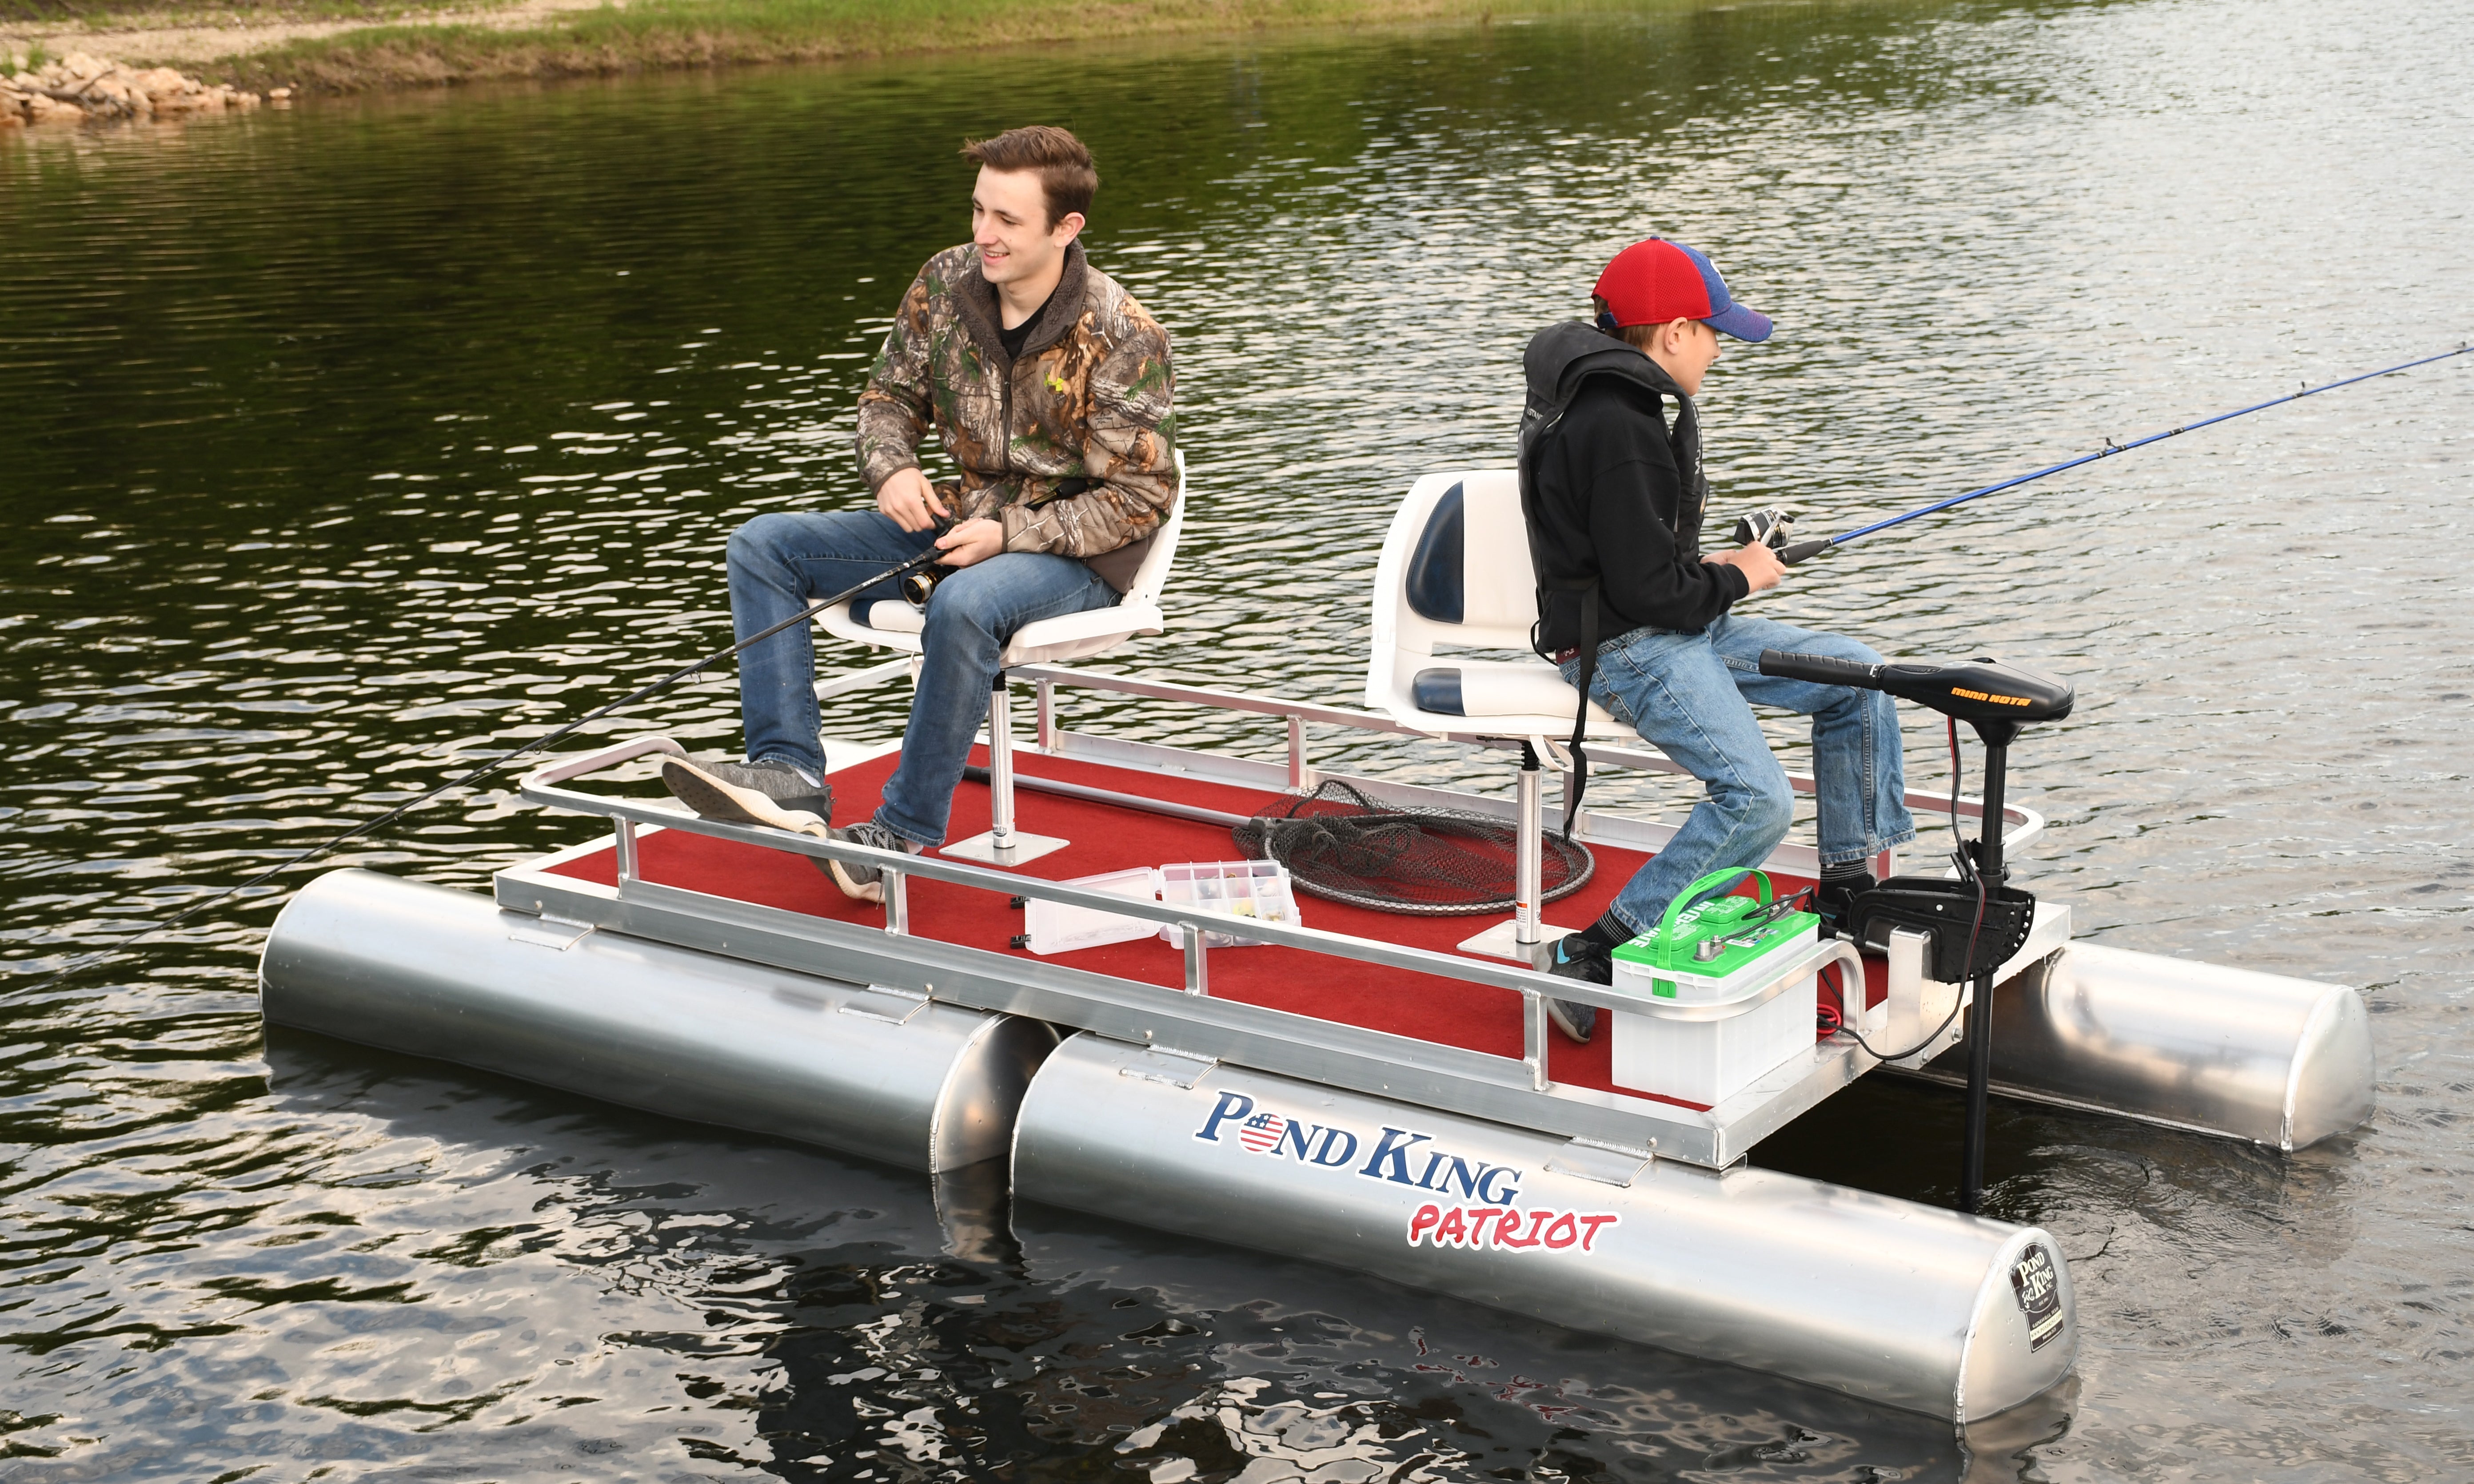 Patriot Mini Pontoon Boat  Two-Man Fishing Pontoon Boat – Pond King, Inc.